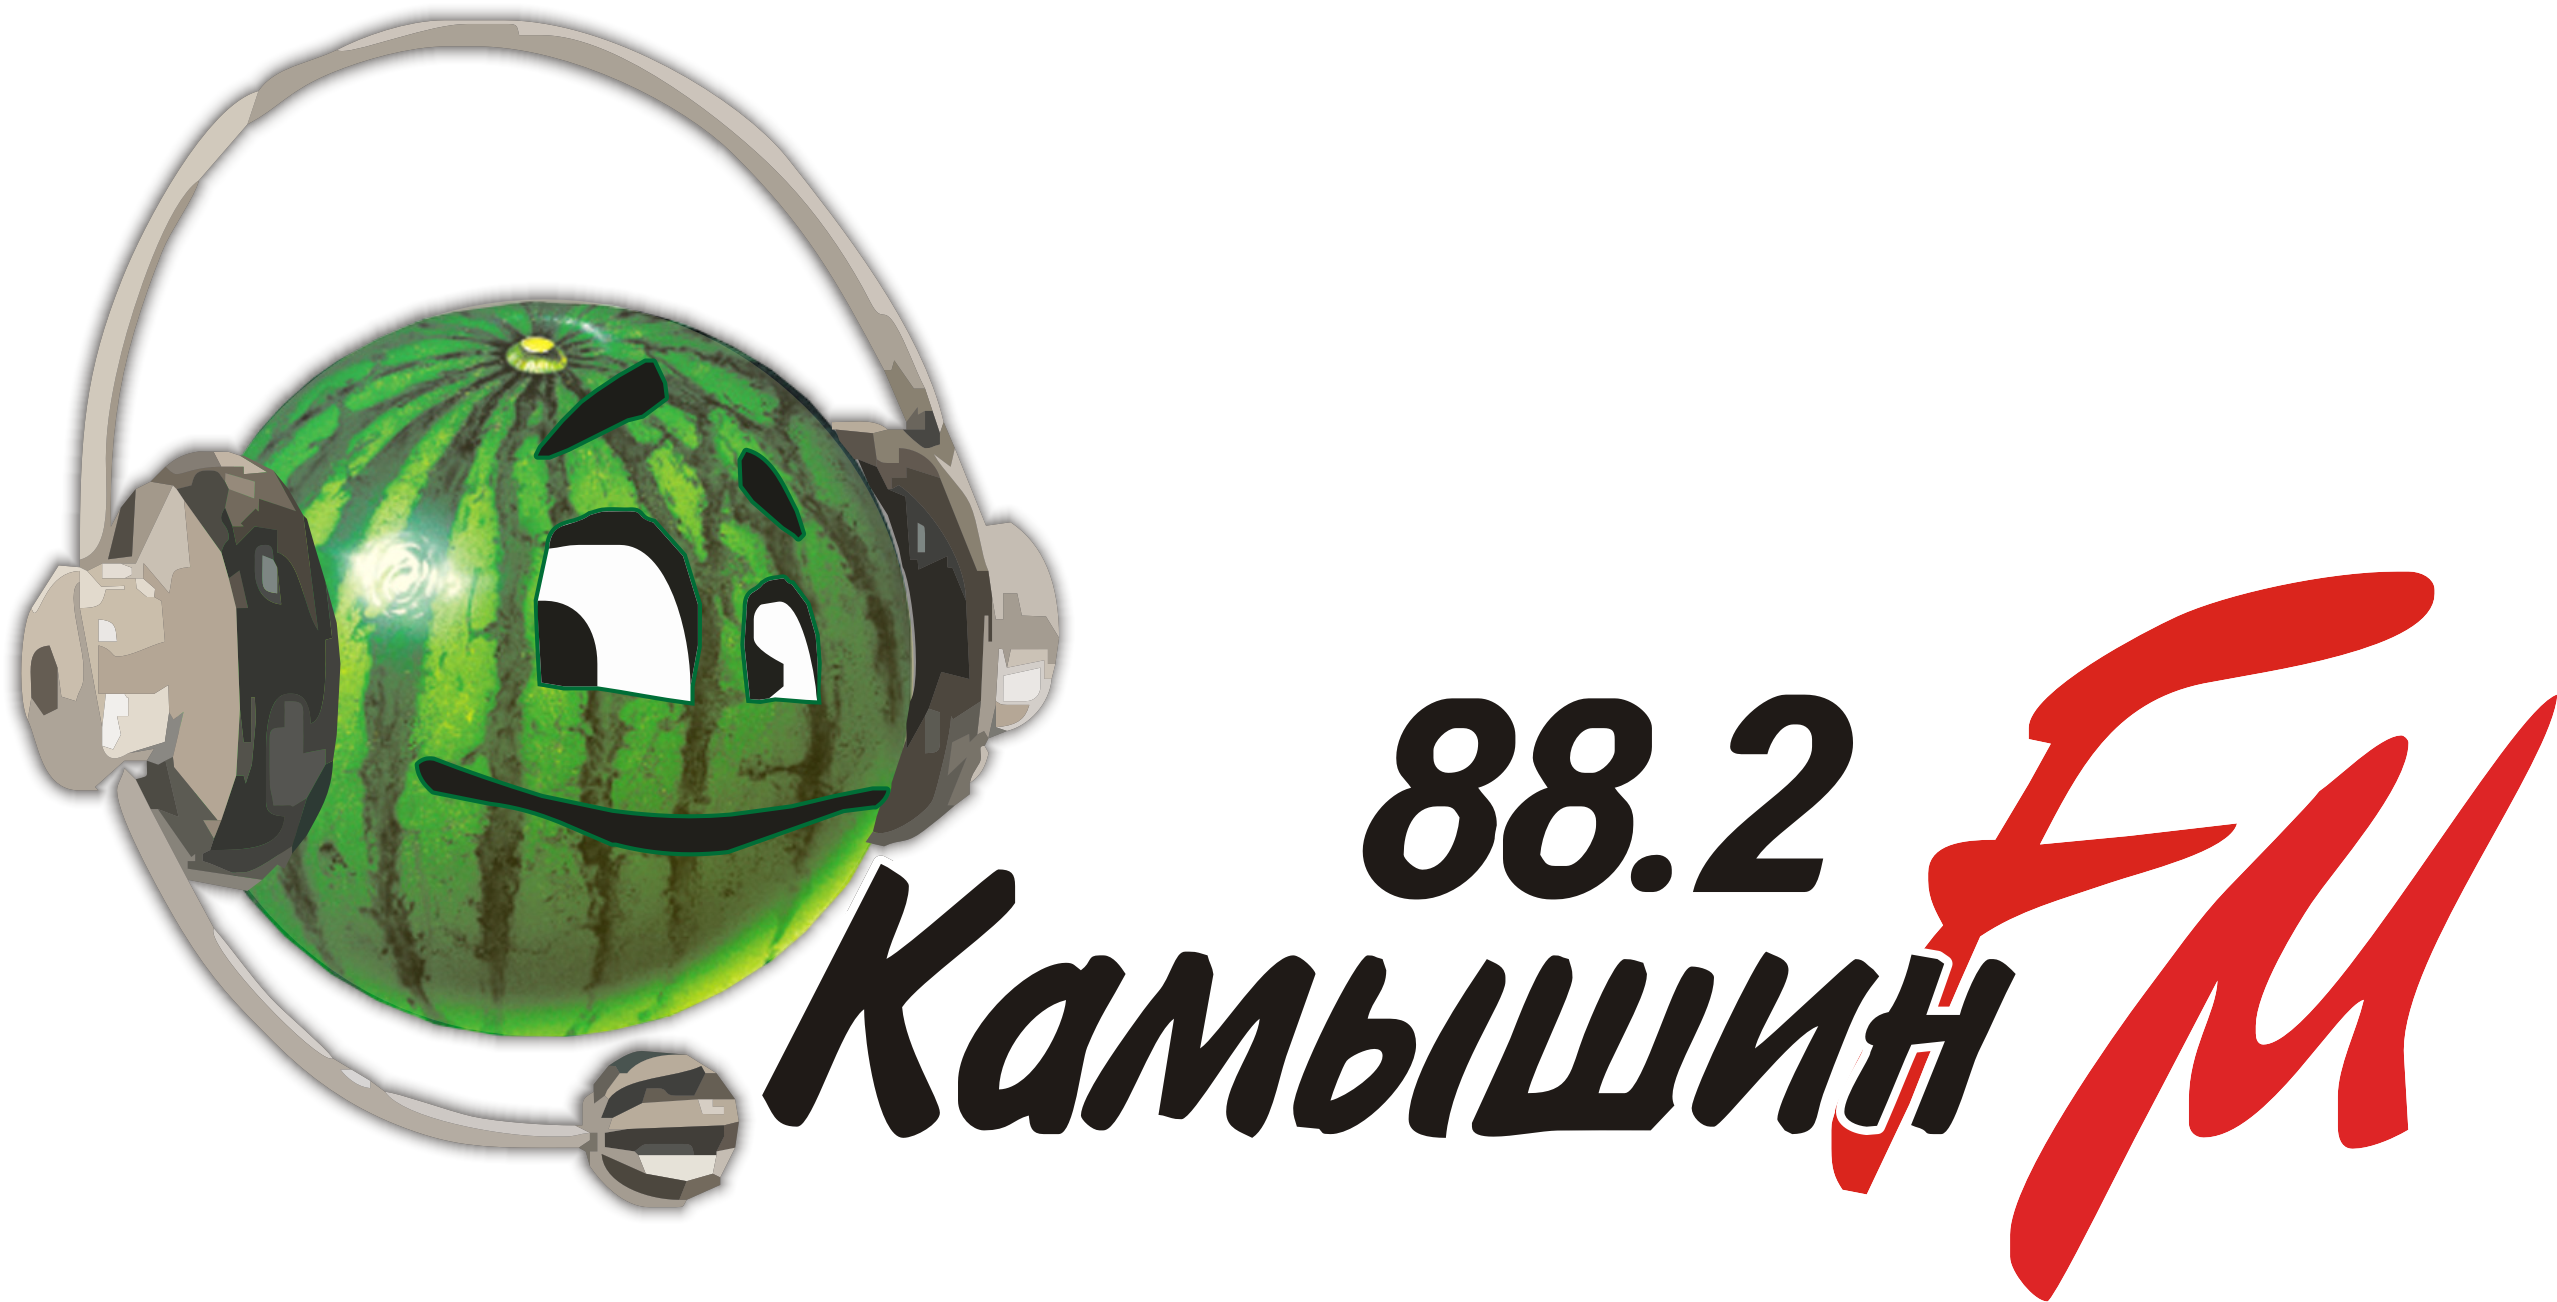 Камышин фм 88.2, радиостанция, г. Камышин